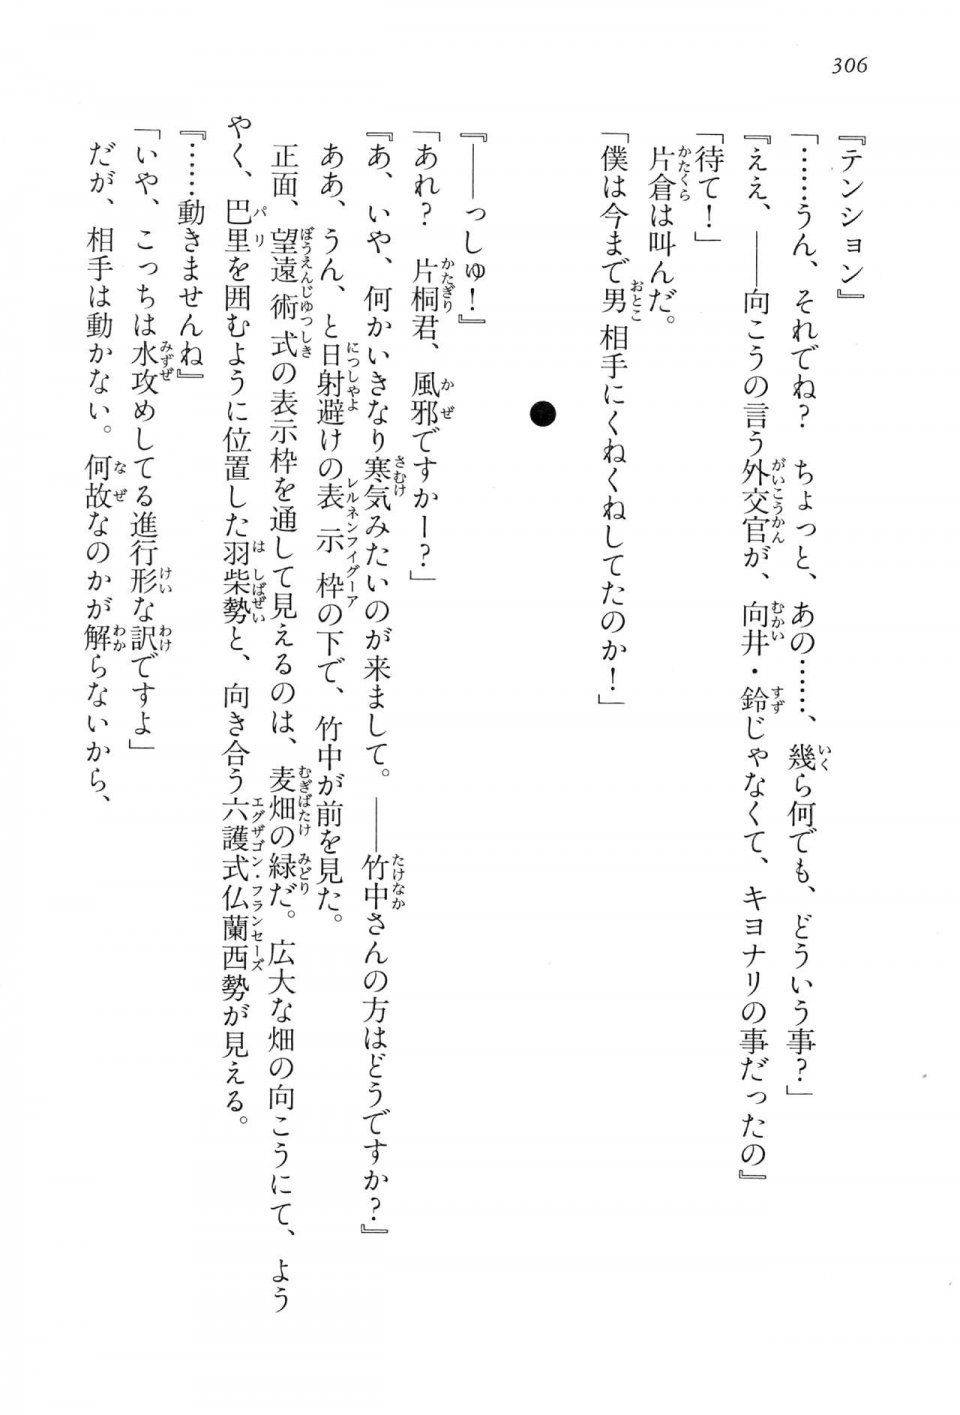 Kyoukai Senjou no Horizon LN Vol 15(6C) Part 1 - Photo #306